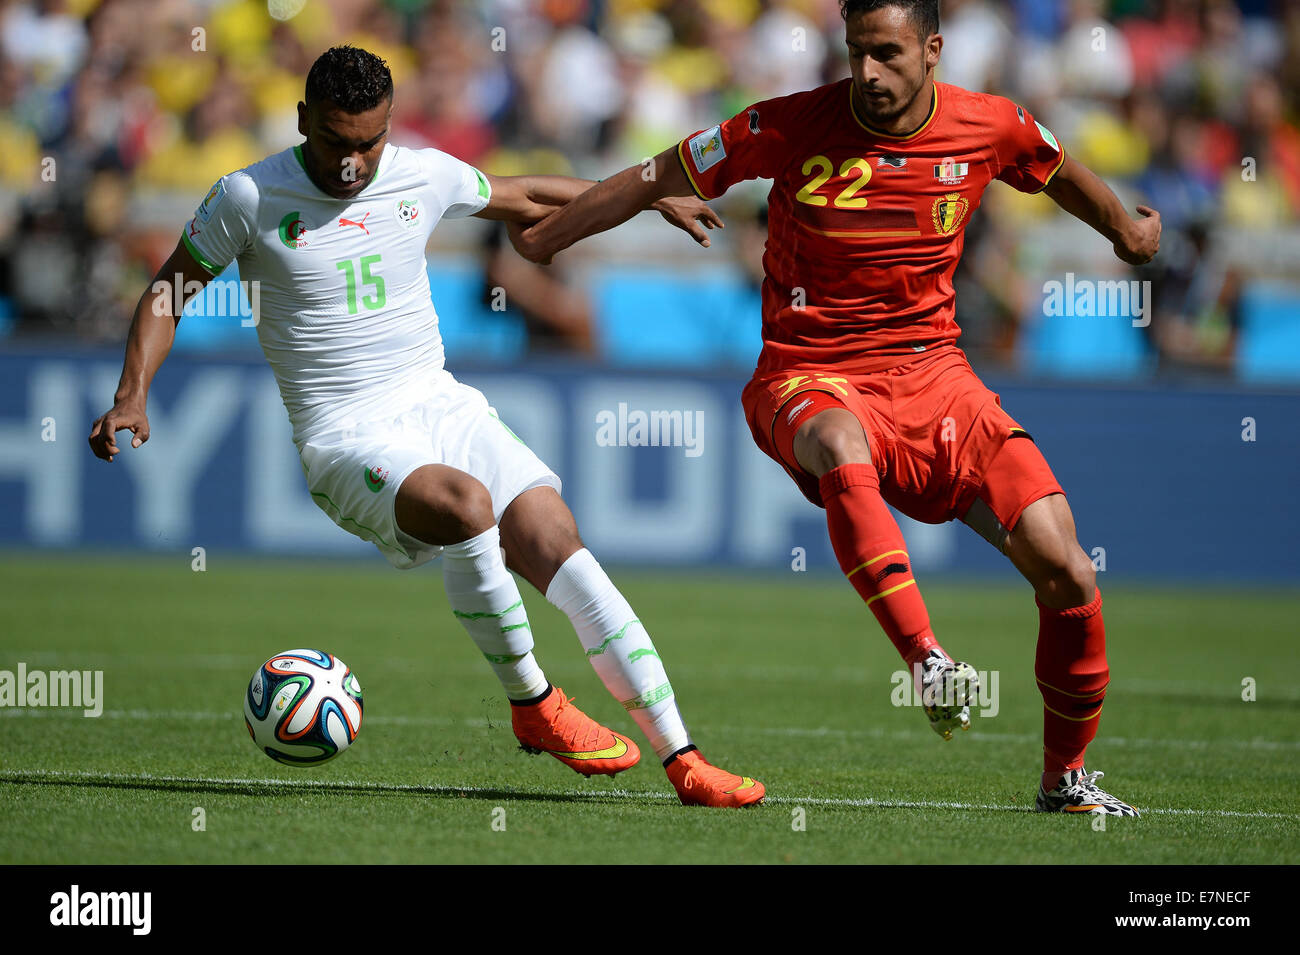 El Arabi SOUDANI and Nacer CHADLI. Belgium v Algeria, group match. FIFA World Cup 2014 Brazil. Mineirao stadium Belo Horizonte. Stock Photo